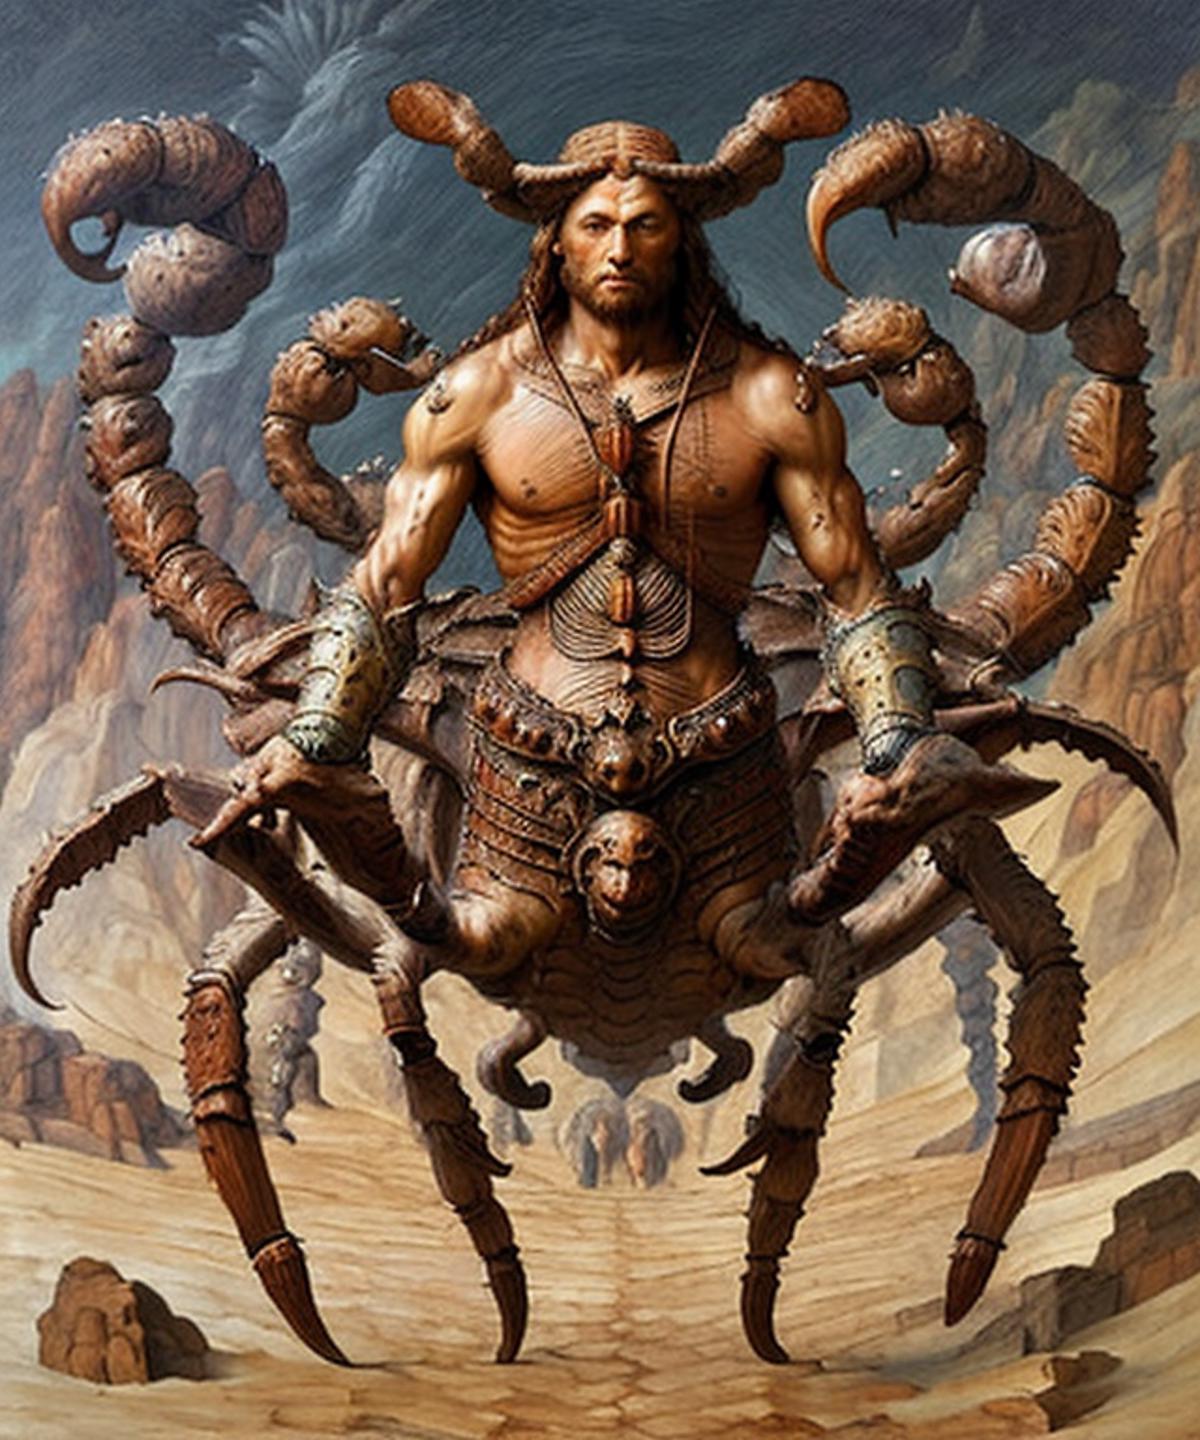 half human half scorpion